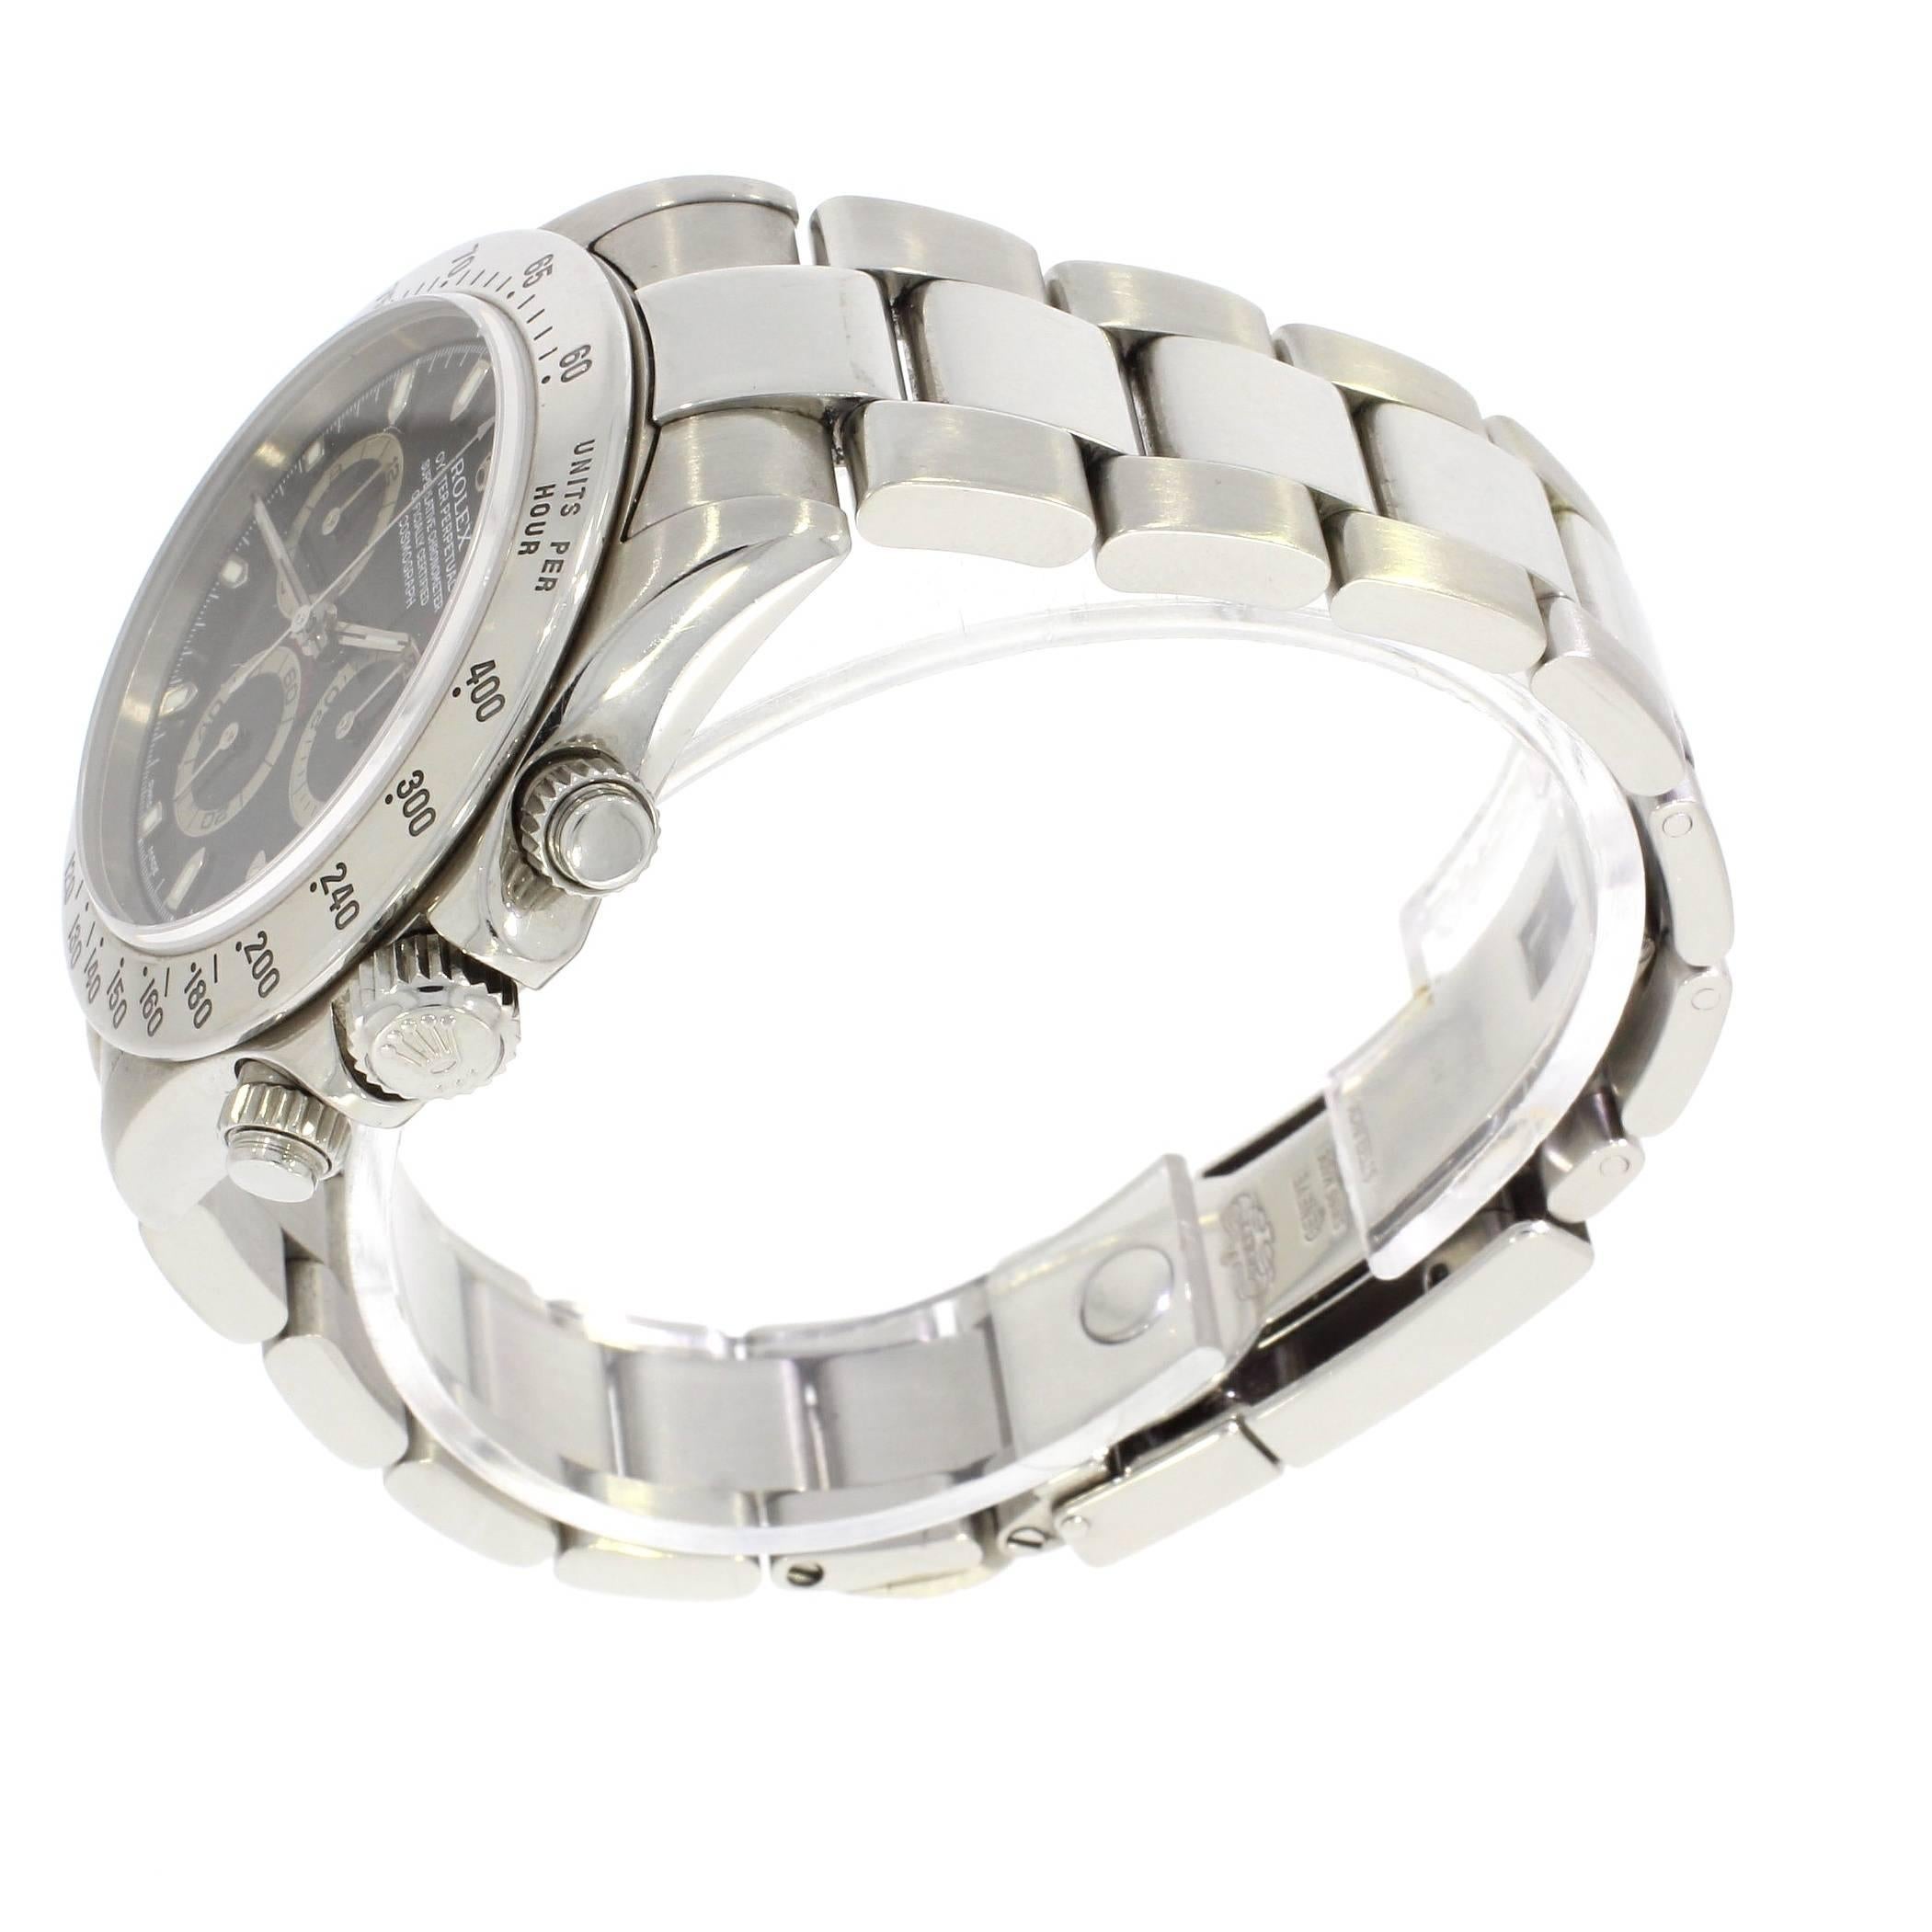 Women's or Men's Rolex Daytona Stainless Steel Chronograph 116520 Automatic Wrist Watch